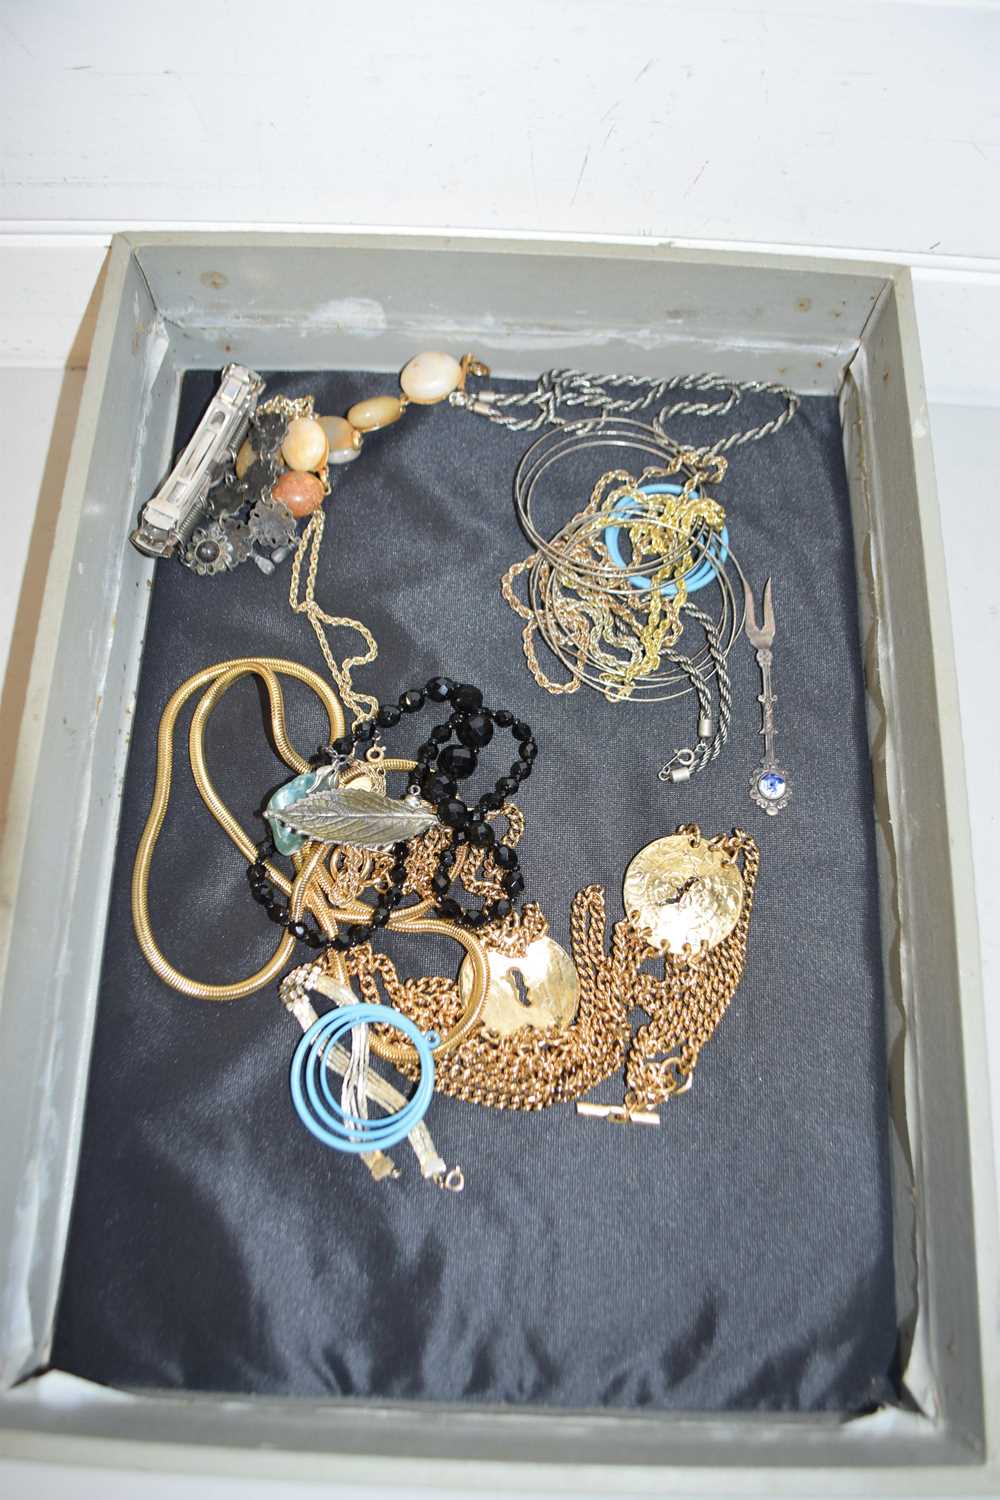 Display tray of various costume jewellery,necklaces, bangles, pendants etc